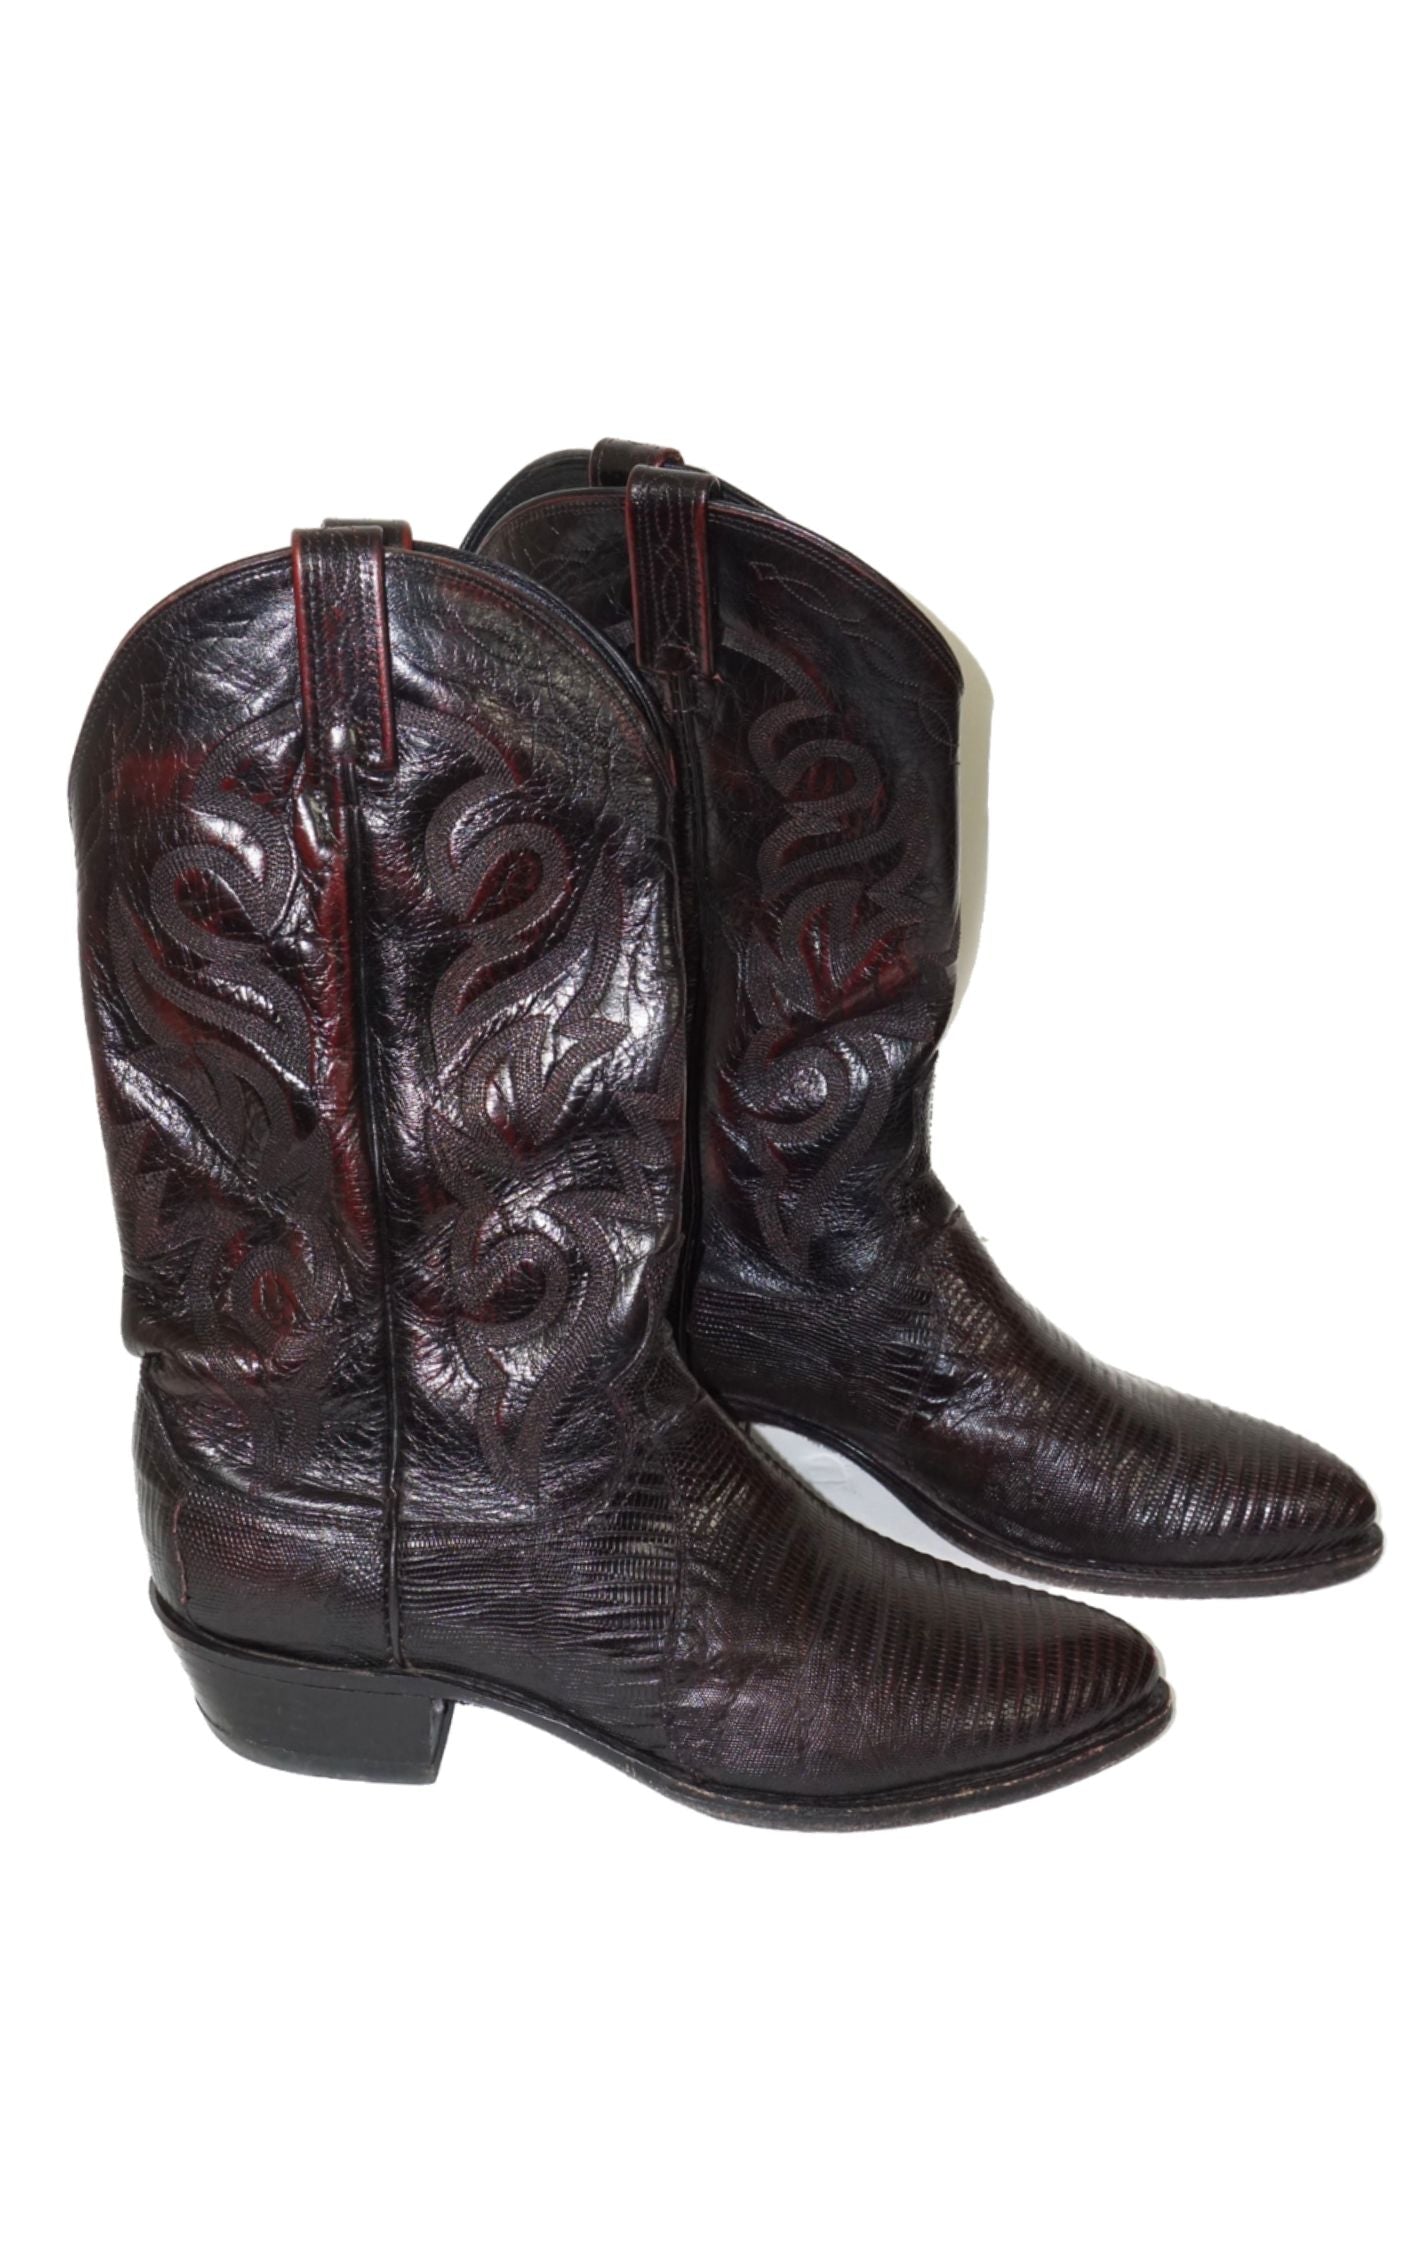 DAN POST El Paso Western Leather Boots resellum